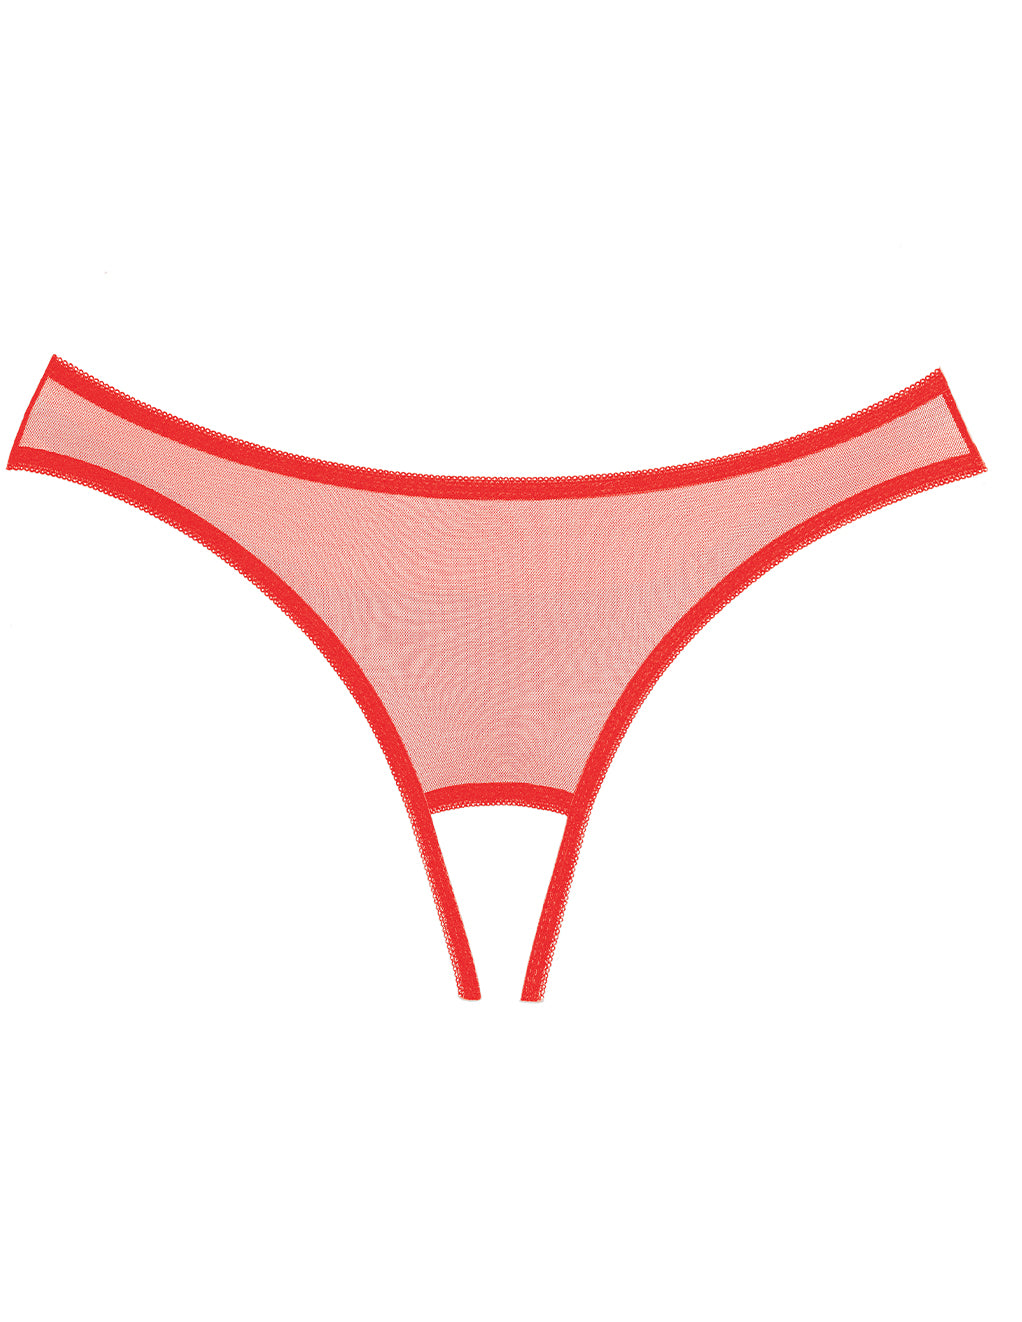 Allure Lingerie Sheer Eyelash Lace Open Back Panty- Red- Front